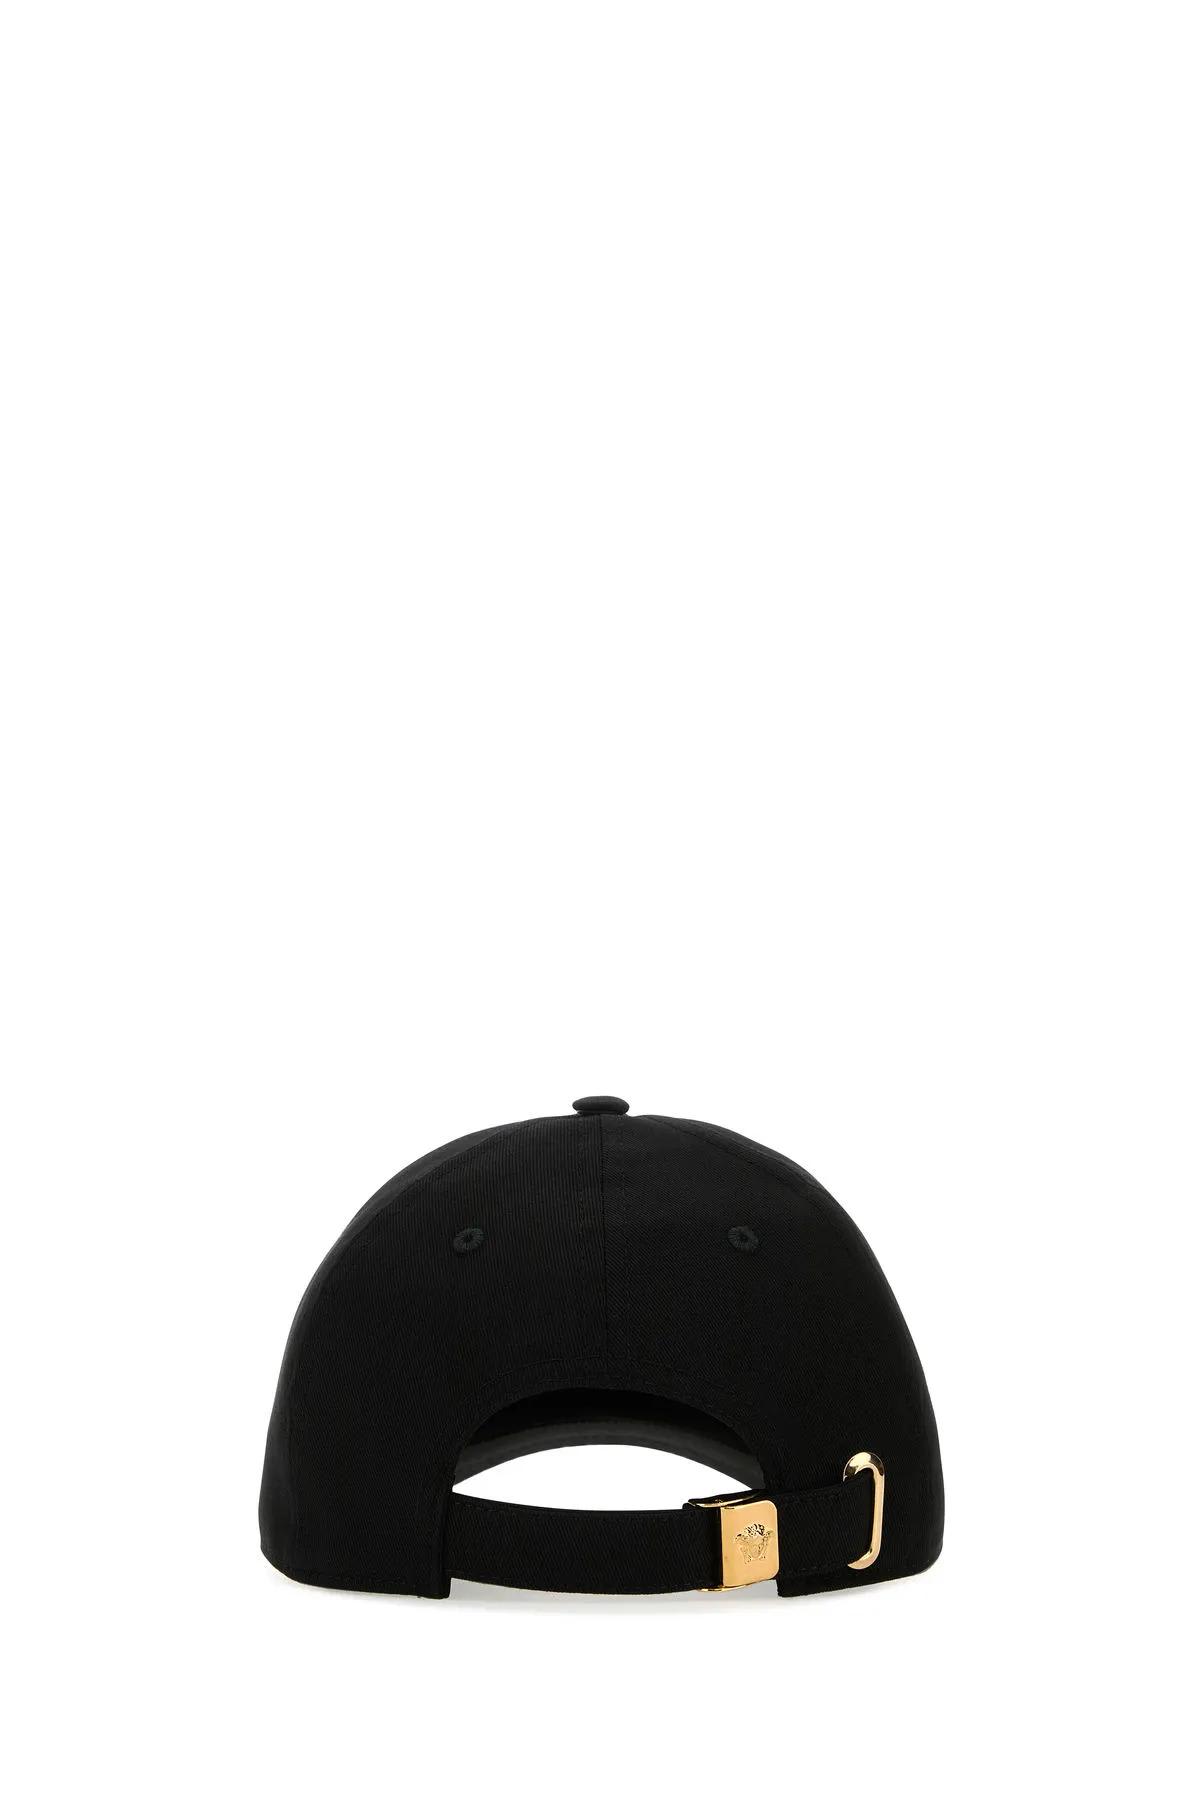 Shop Versace Black Cotton Baseball Cap